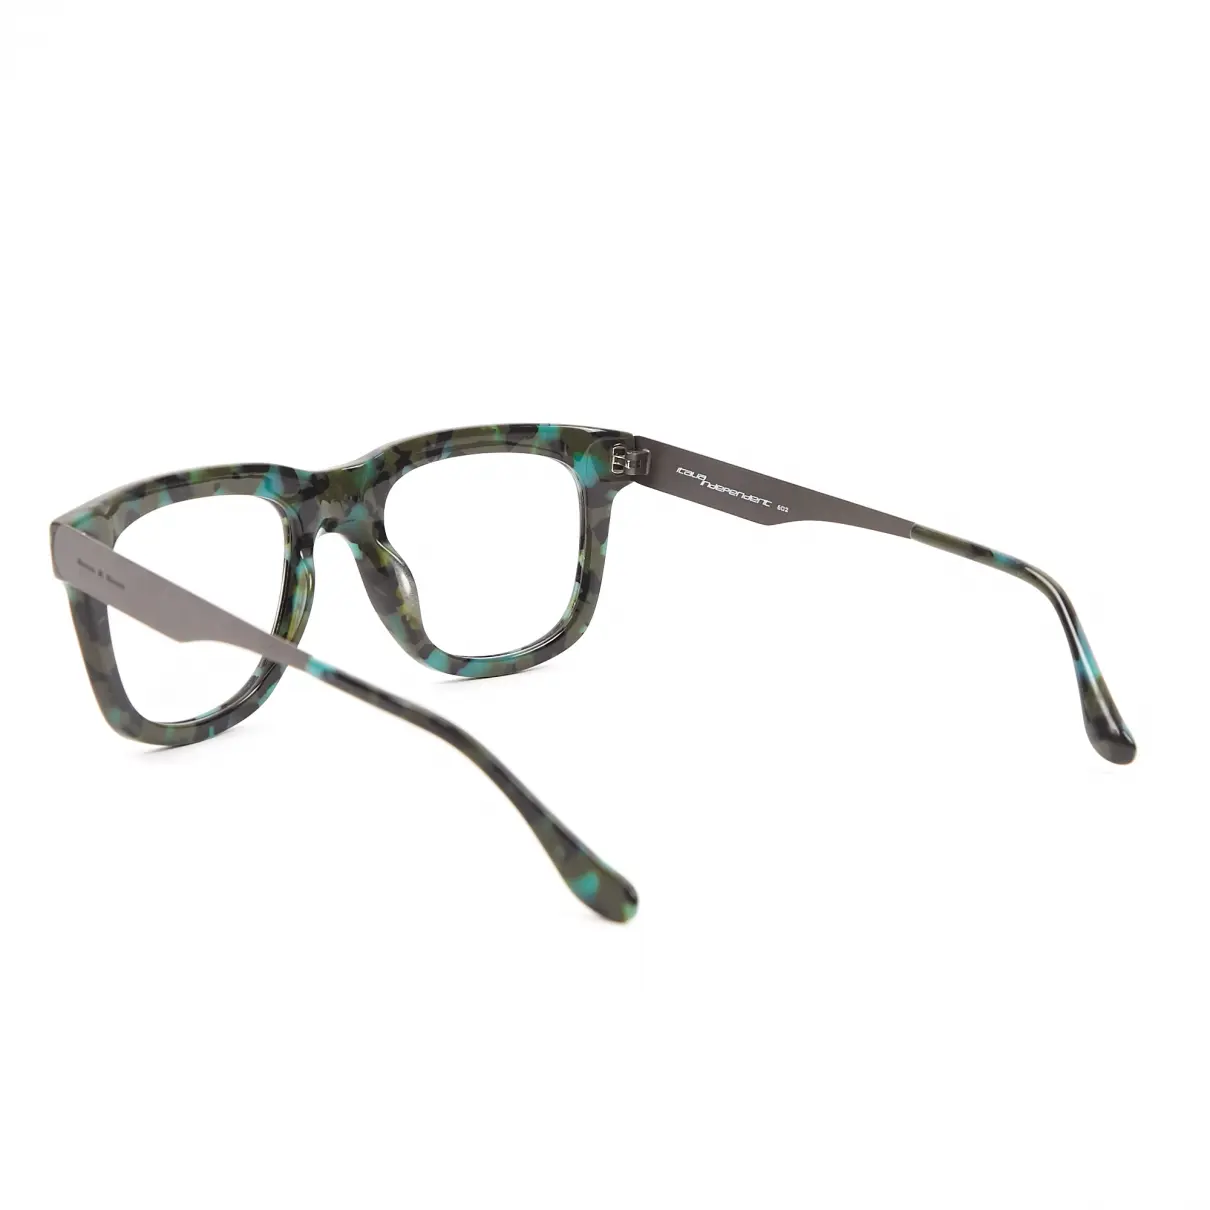 Buy Italia Independent Glasses online